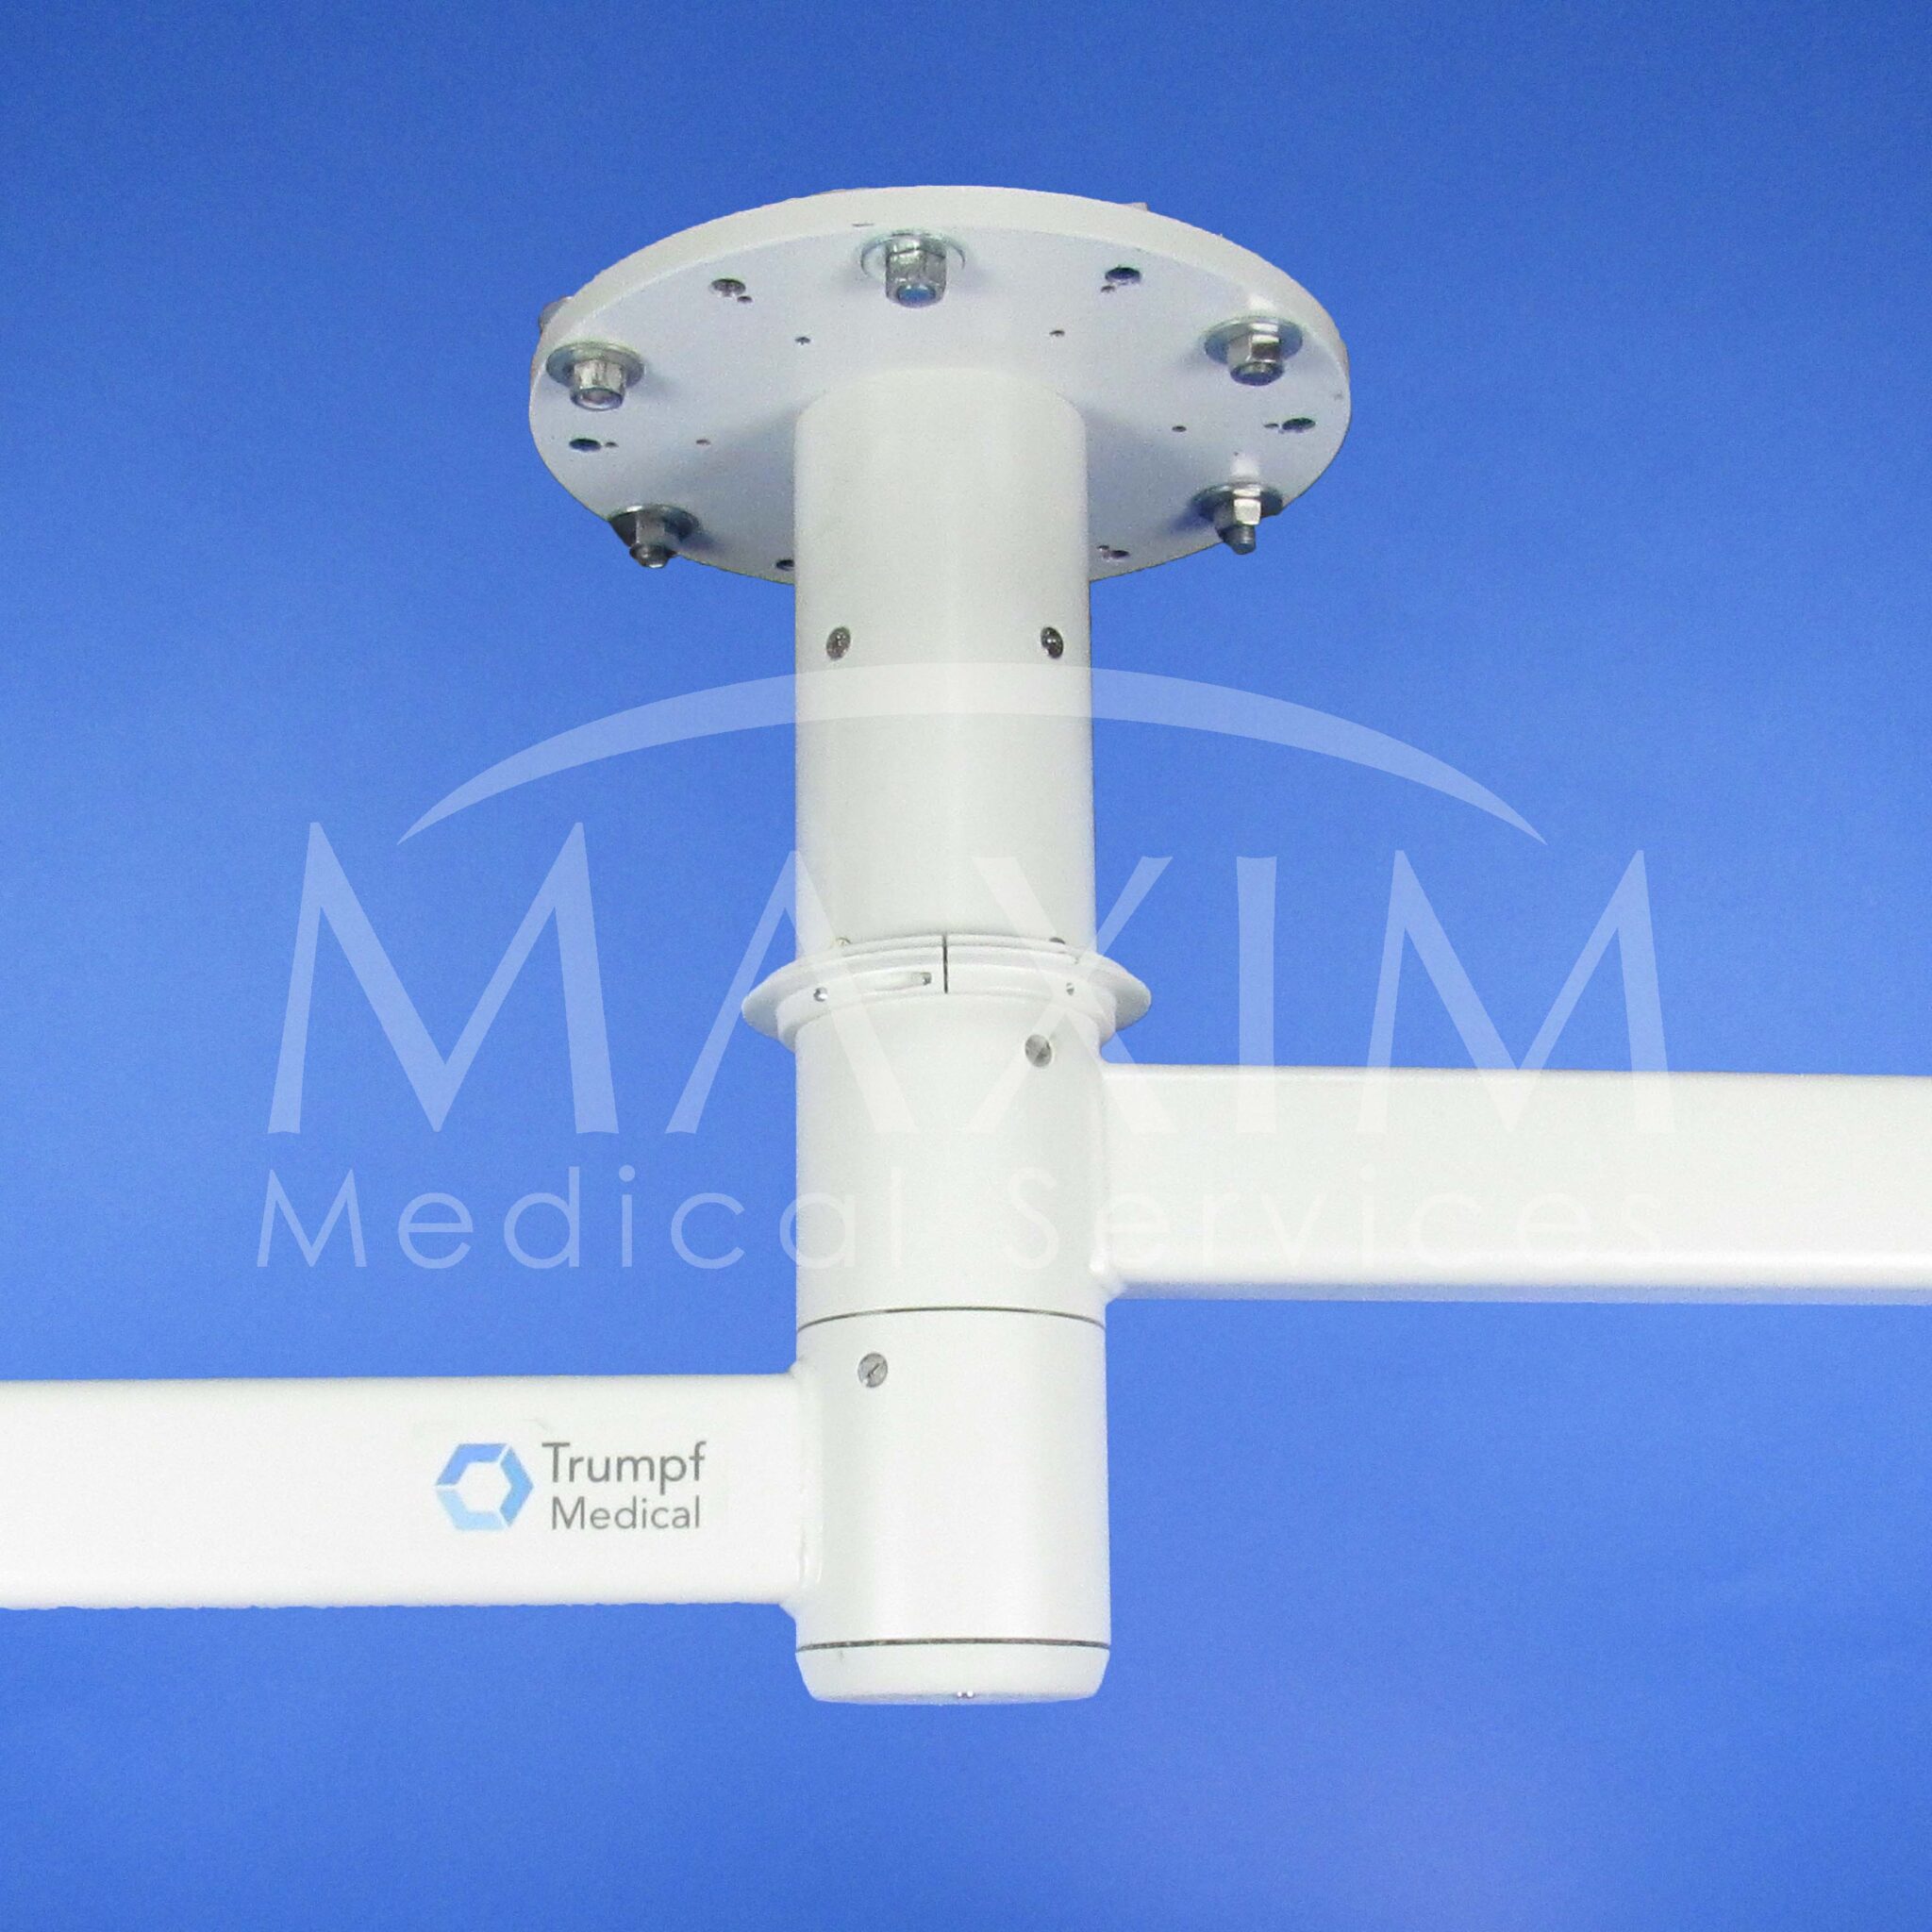 Trumpf TruLight 5520 Dual Surgical Light System